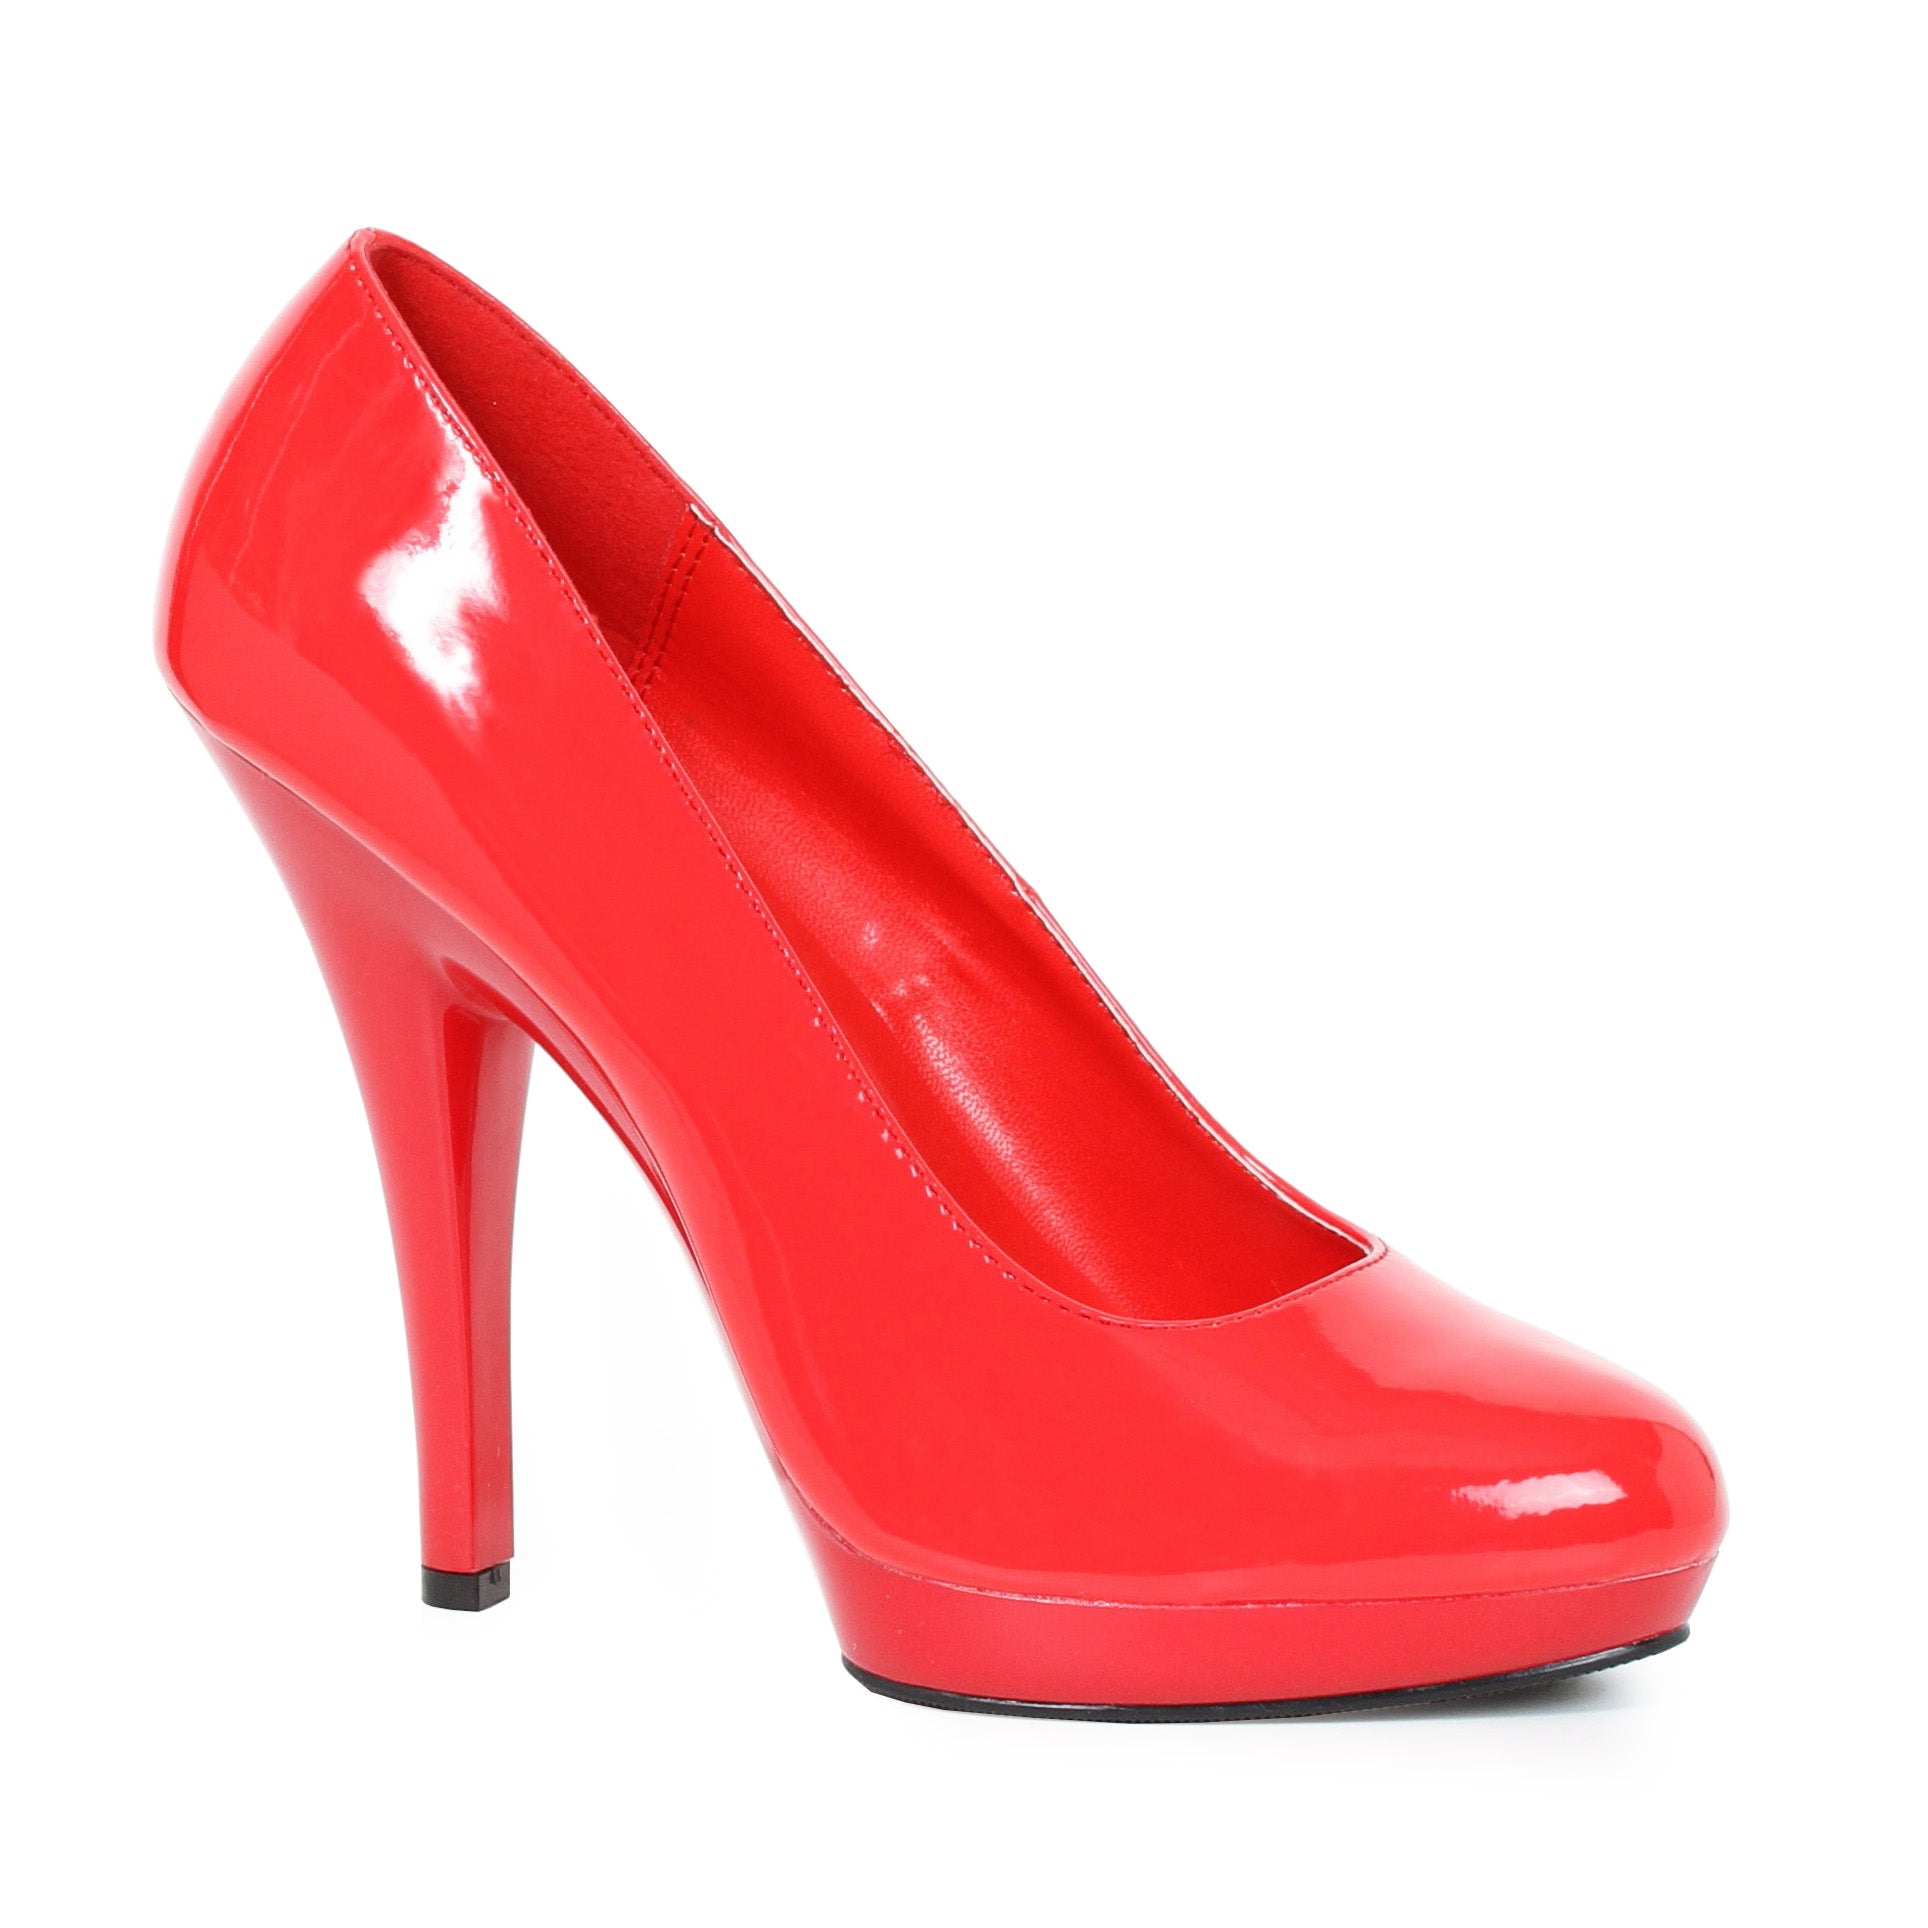 521-FEMME-W Ellie Shoes 5"  Heel  Wide Width Pumps. COMPETITIO EXTENDED S 5 INCH HEEL PUMPS